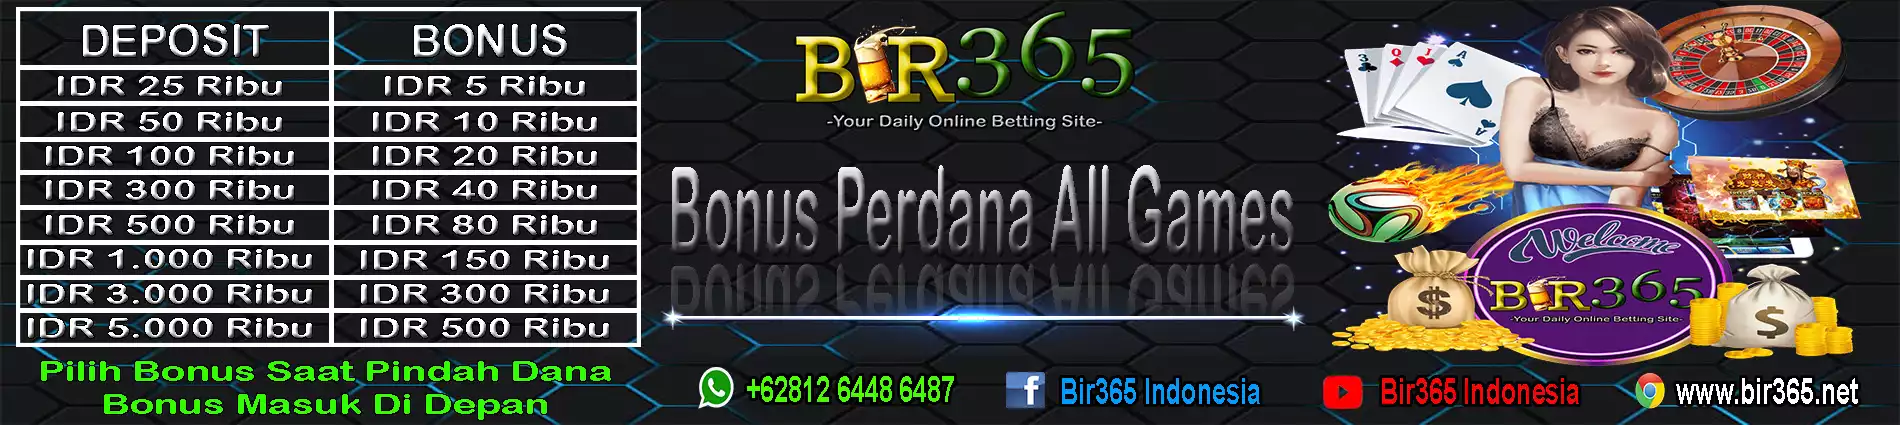 Bonus Deposit Perdana Slots Live Casino Sportbook